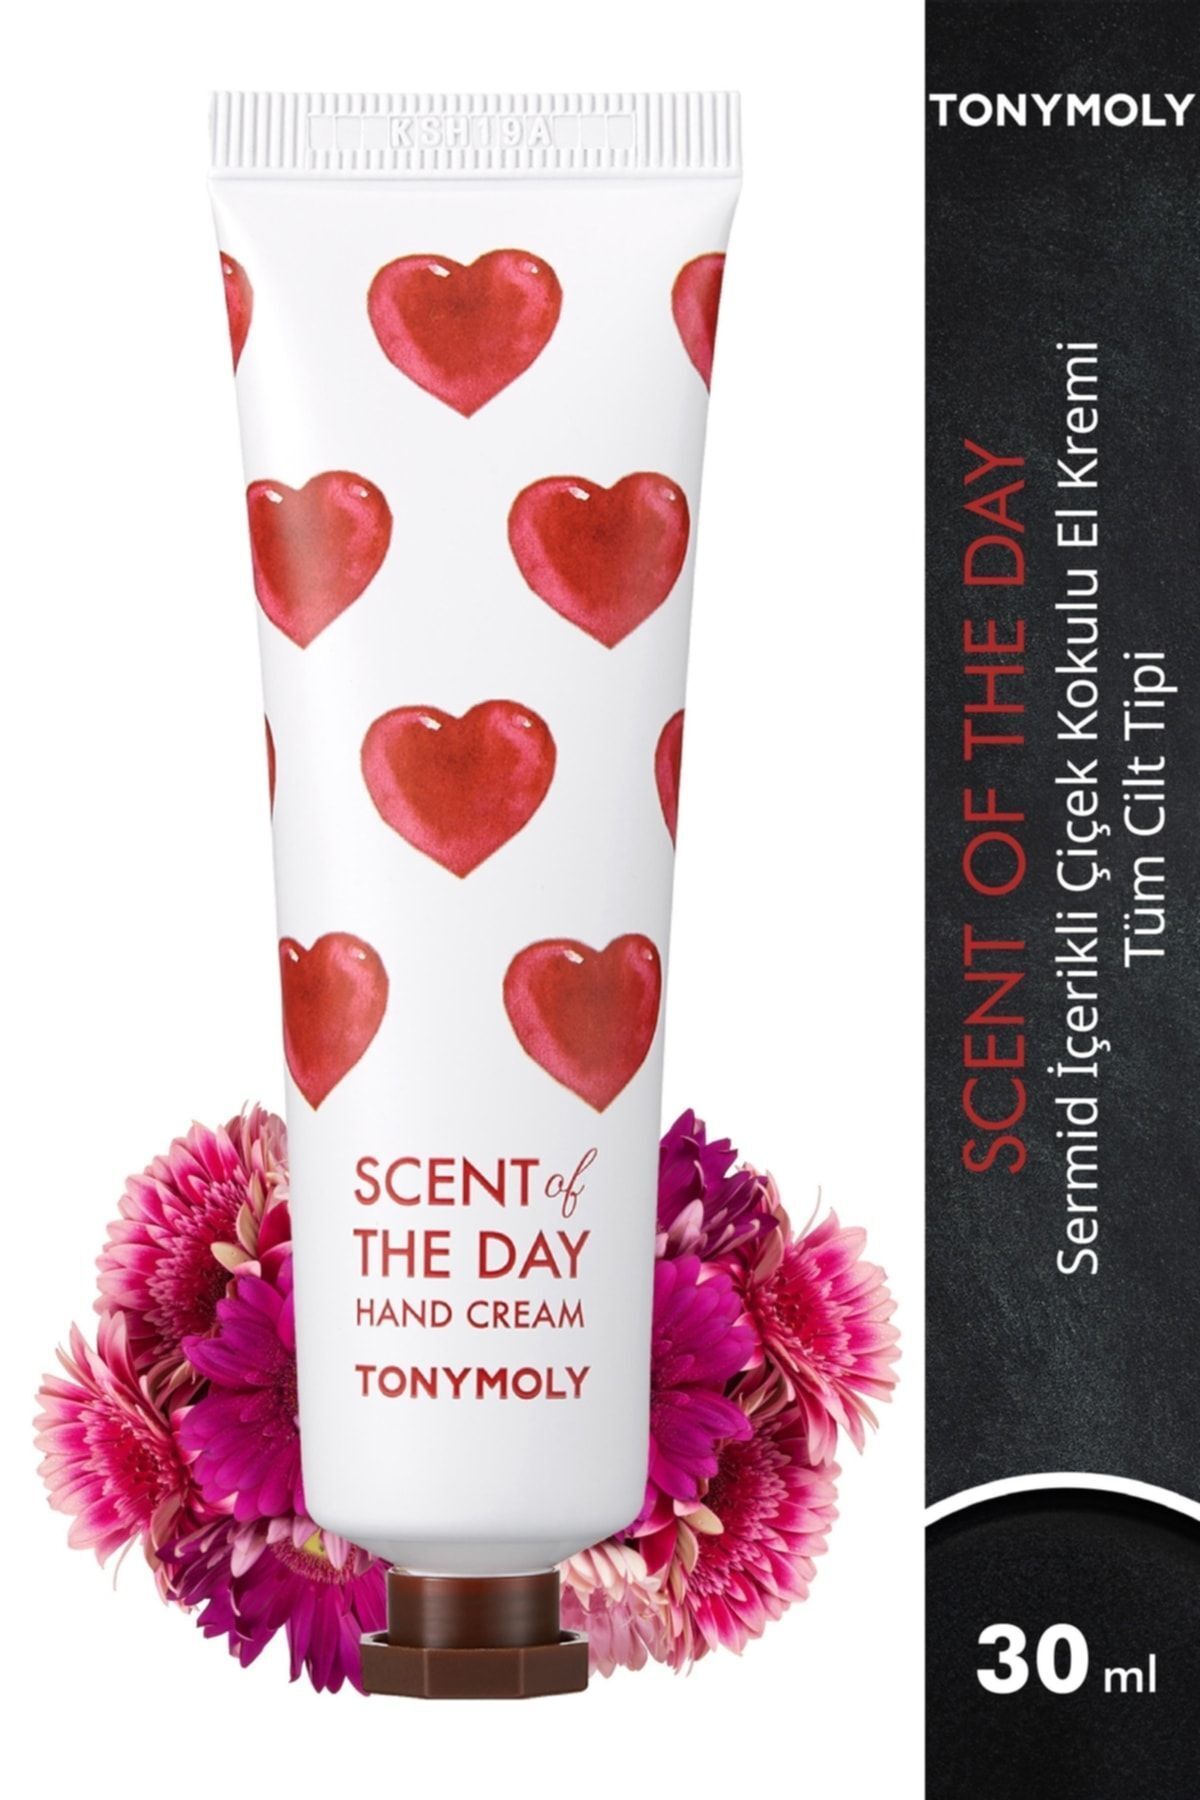 TONYMOLY El Kremi Scent Of The Day Nemlendirici Seramid Çiçek Kokulu Cilt Bakımı 30ml